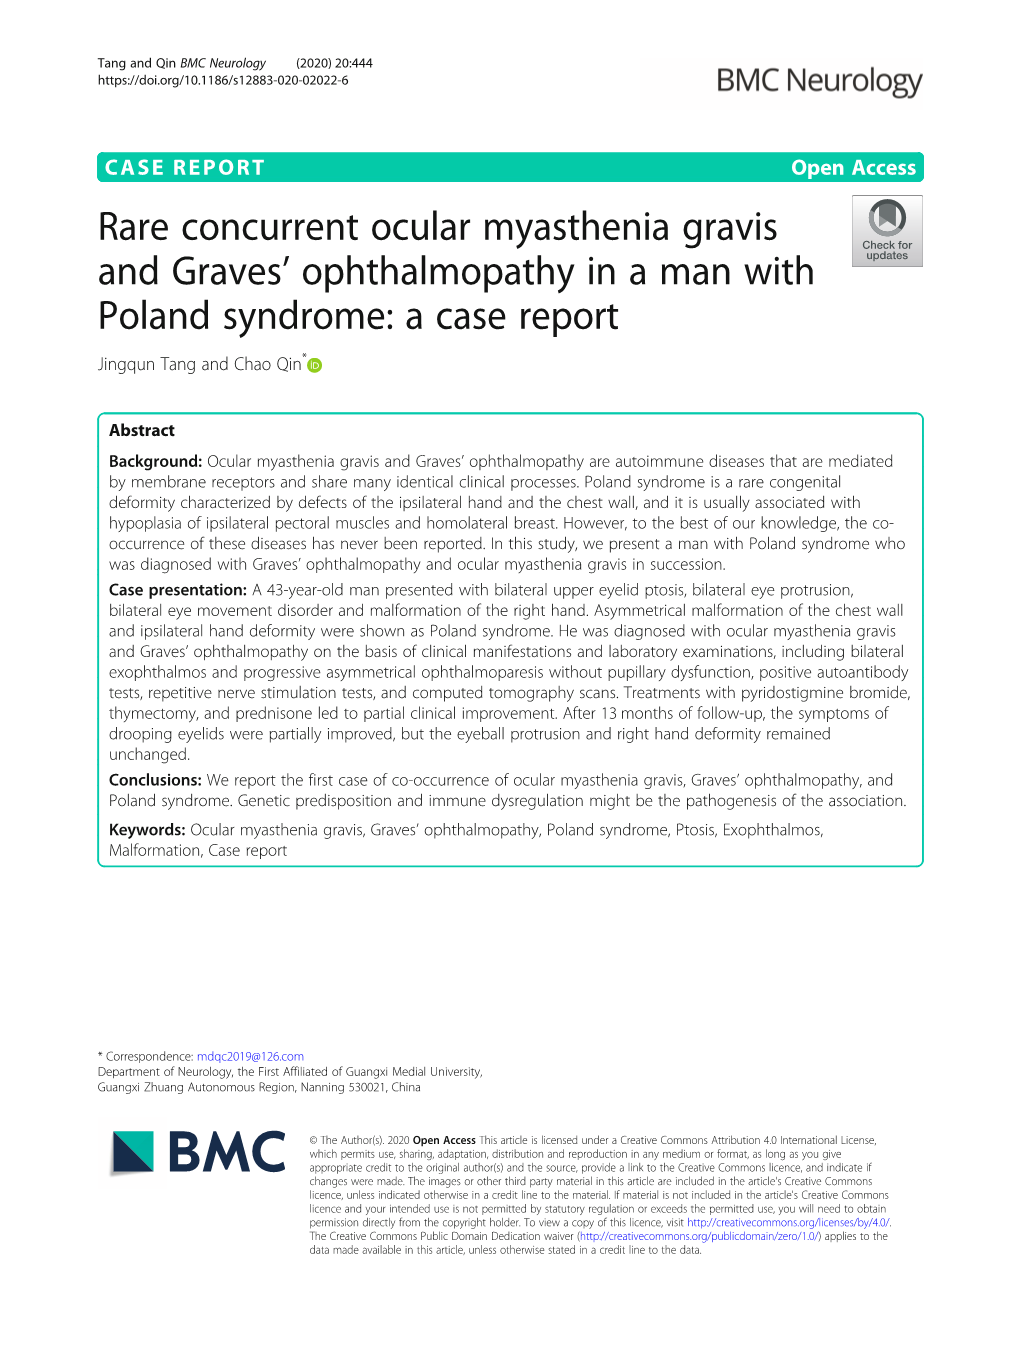 Rare Concurrent Ocular Myasthenia Gravis and Graves' Ophthalmopathy